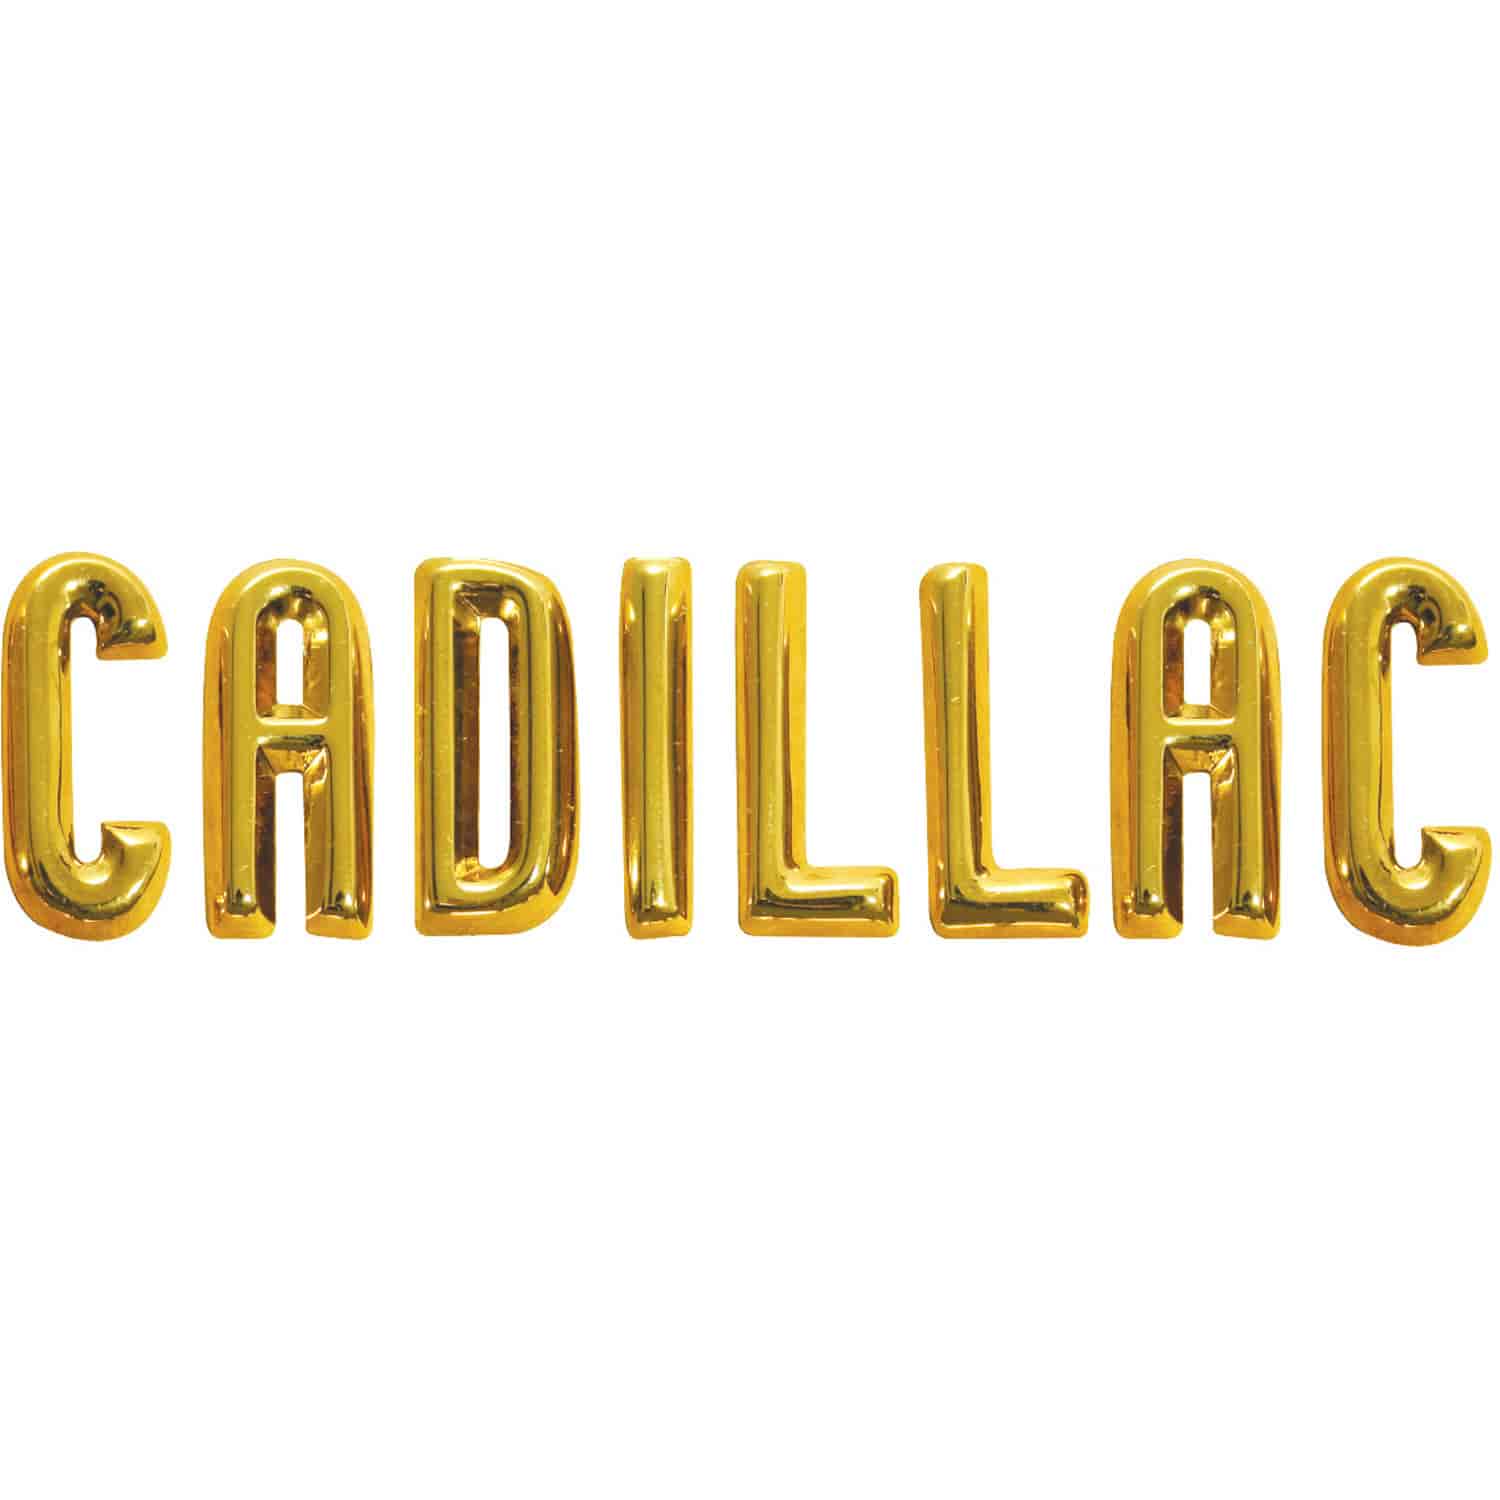 Emblem 1957 Cadillac Trunk Letters